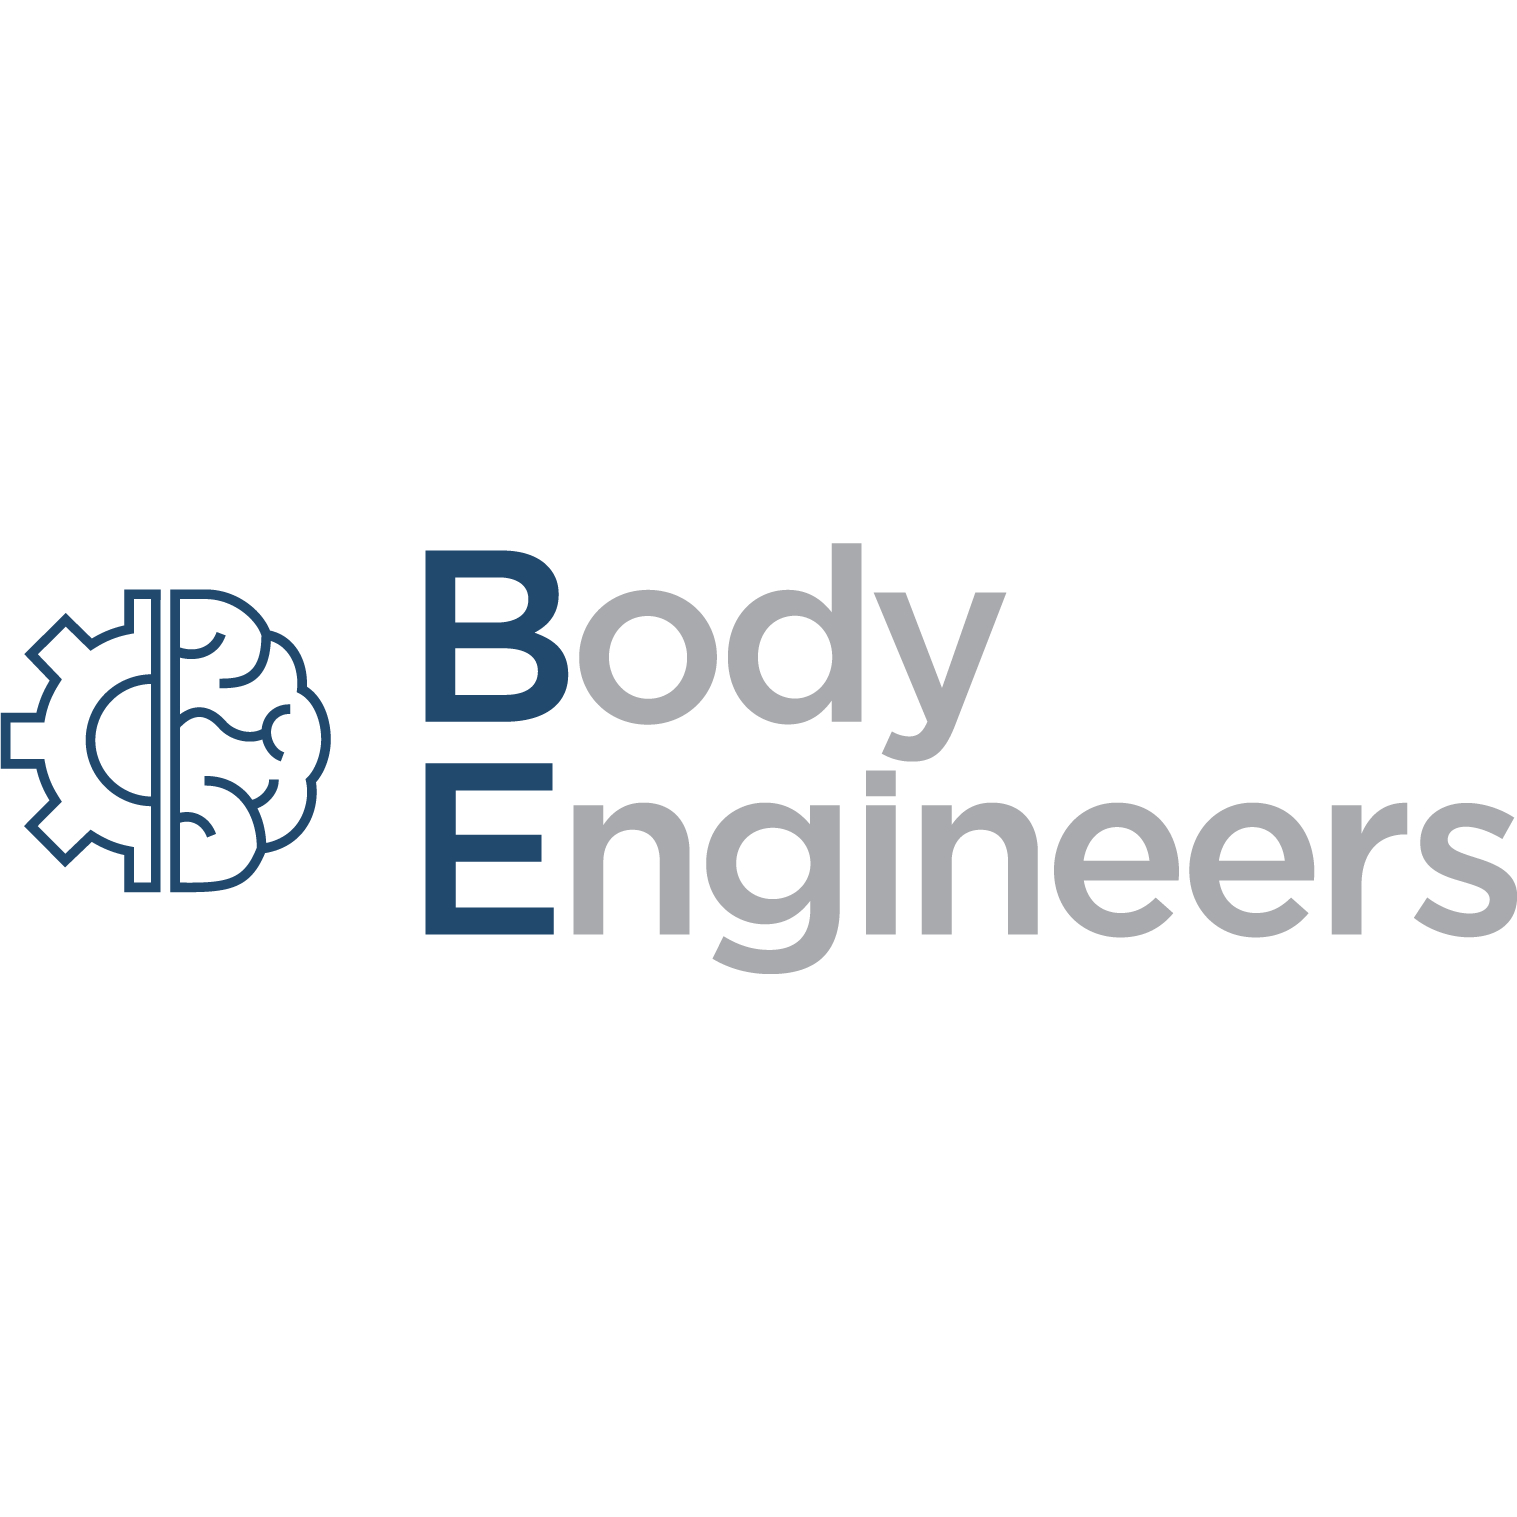 The Body Engineers - Salles d'entraînement